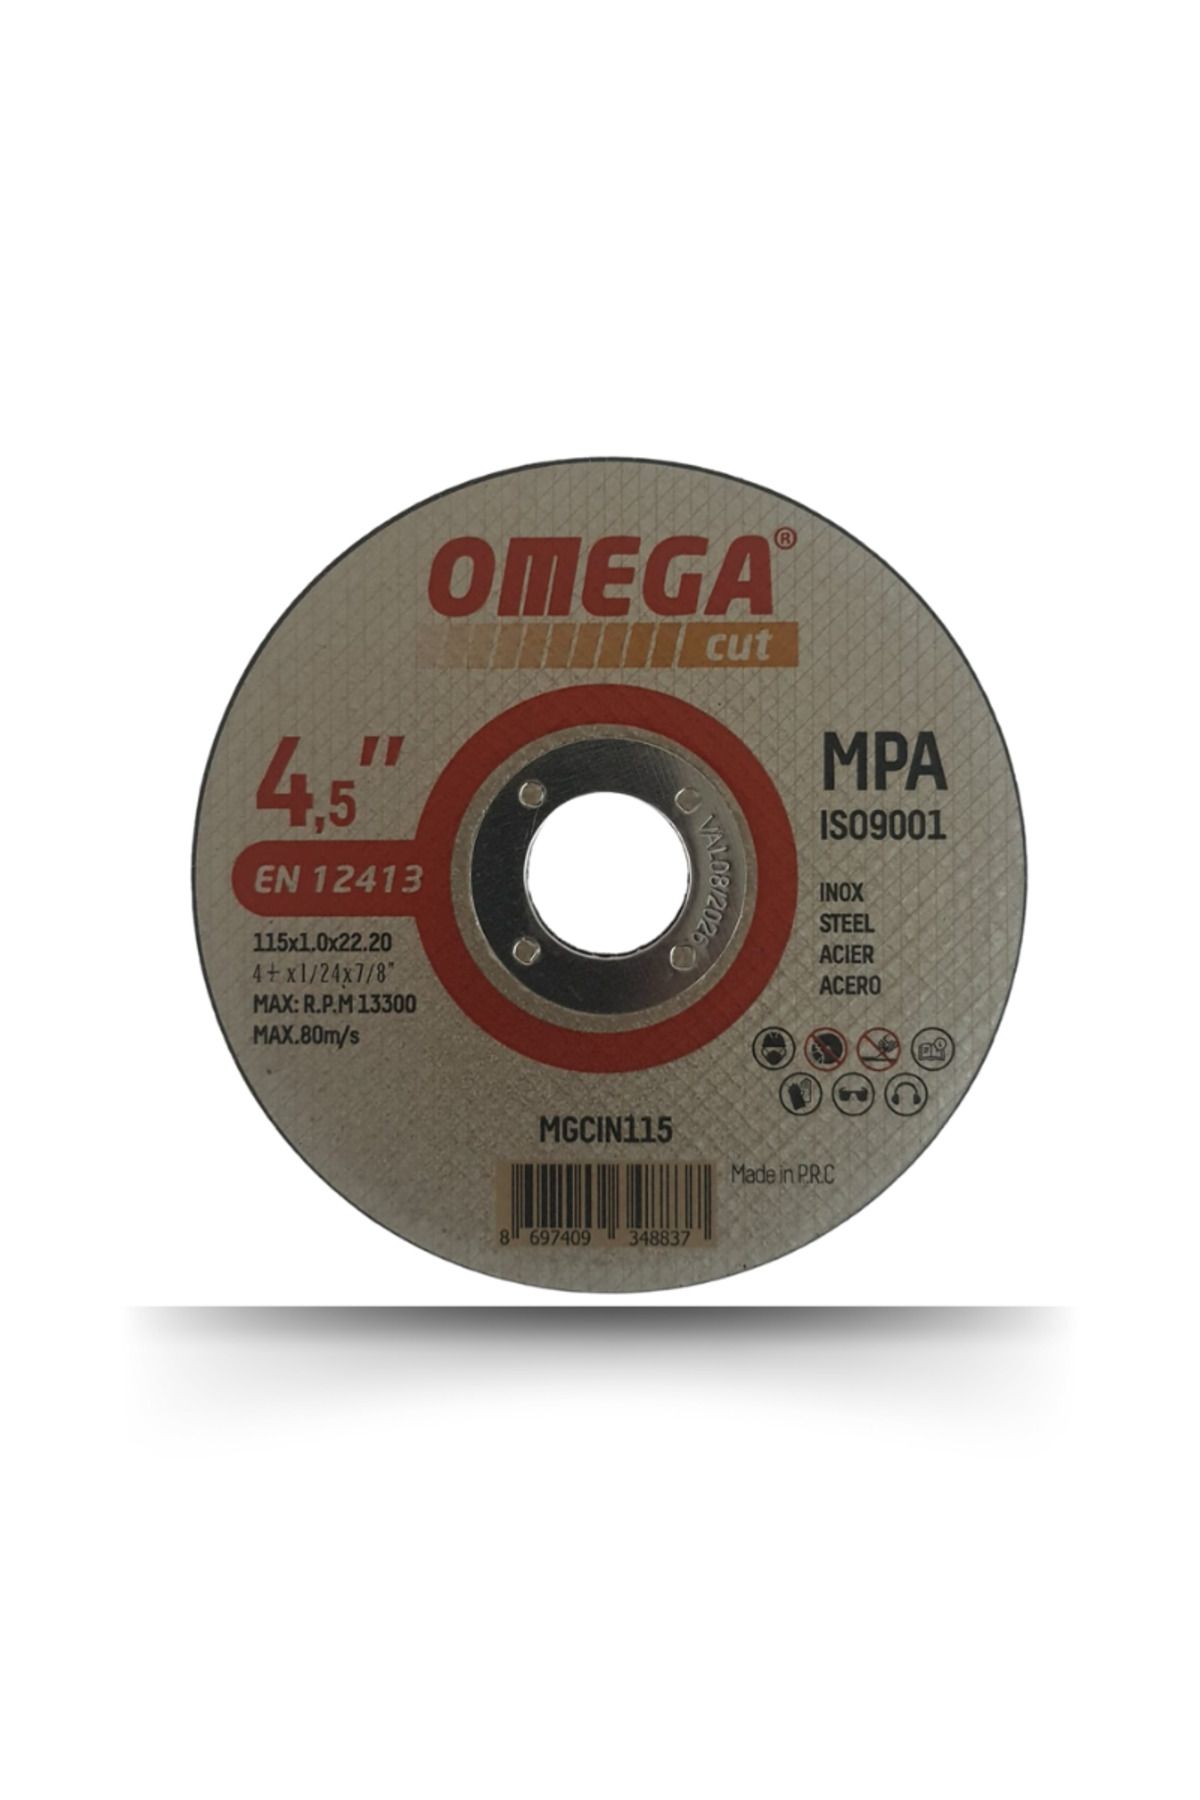 Omega Metal Kesici Taş 115X1 Inox Kesme Taşı (100 Adet)